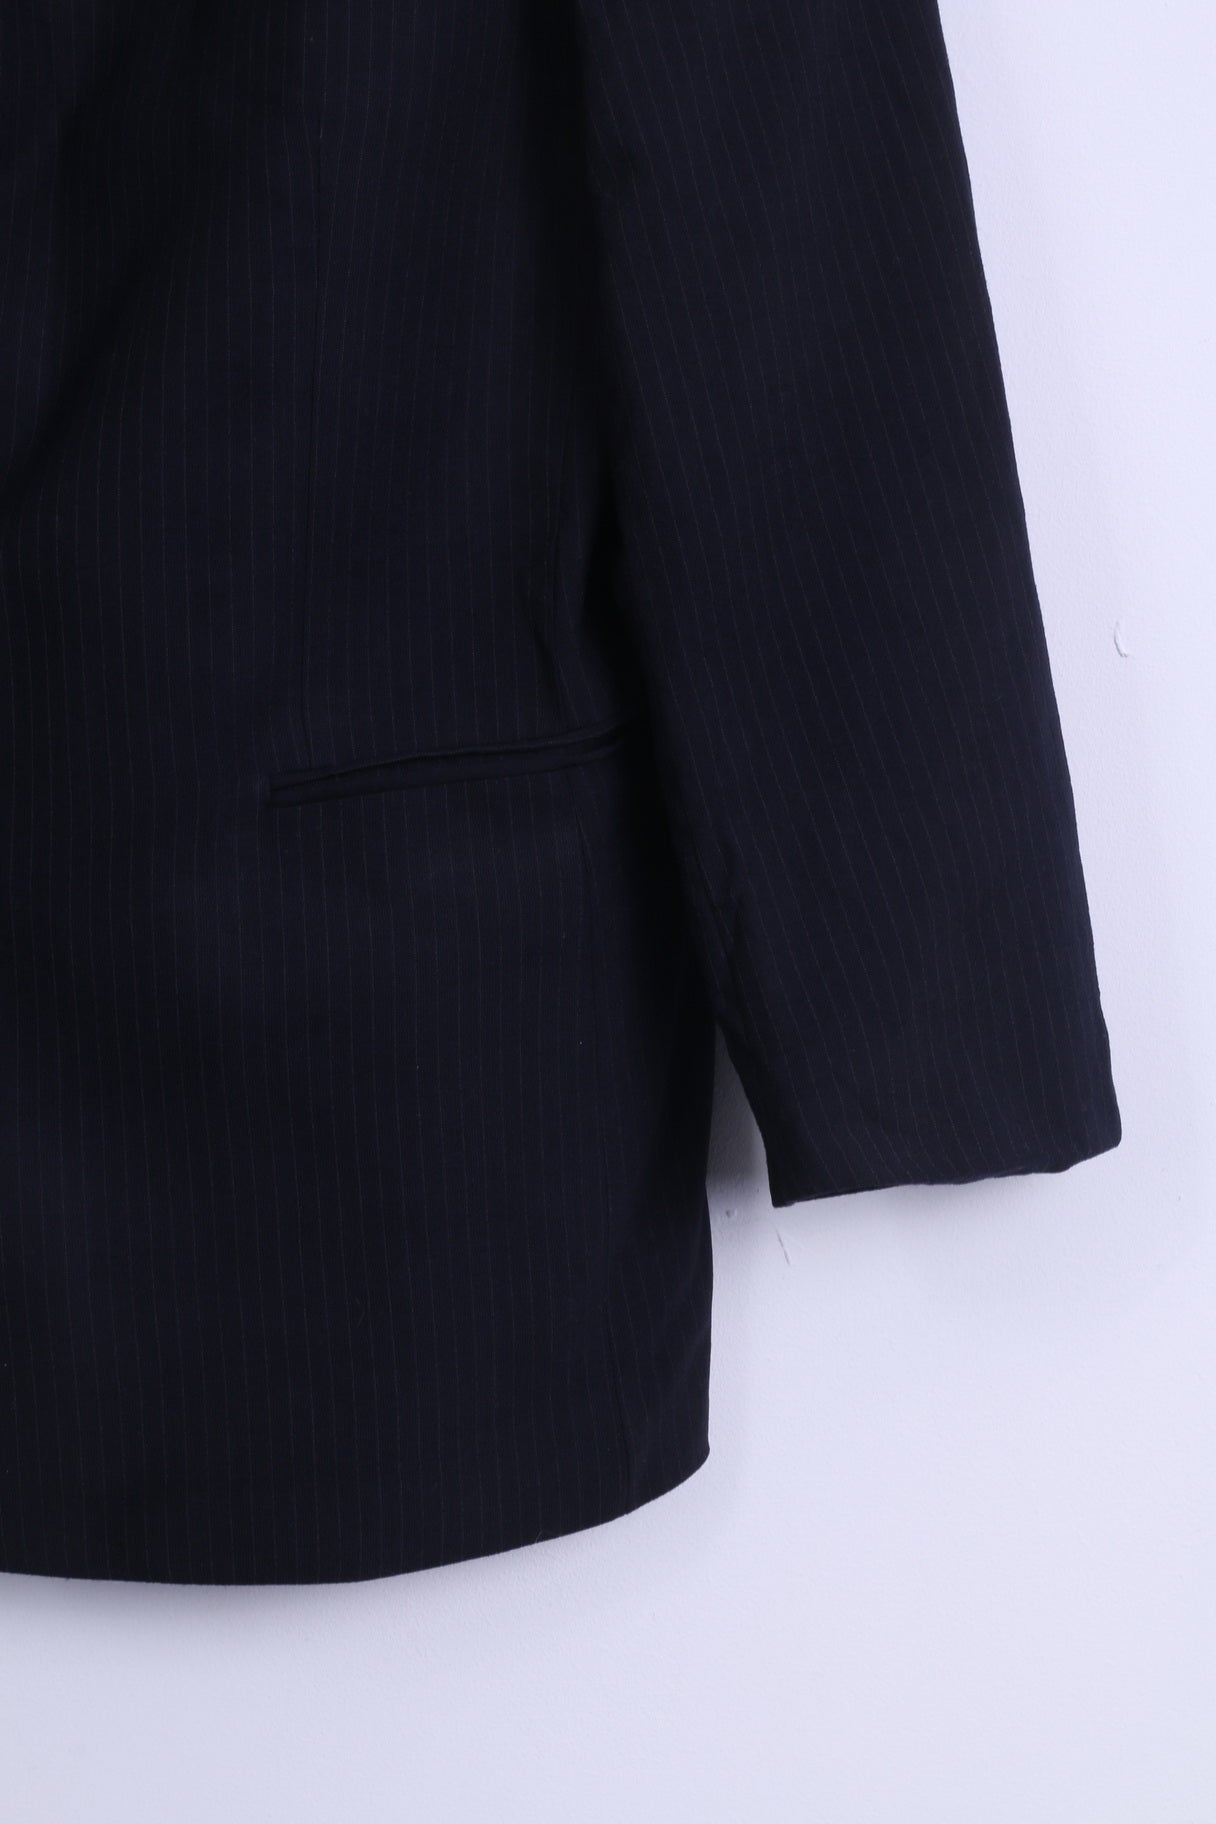 Jaeger By Giovanni Tonella Mens 54 L Jacket Black Wool Striped Top Suit Blazer